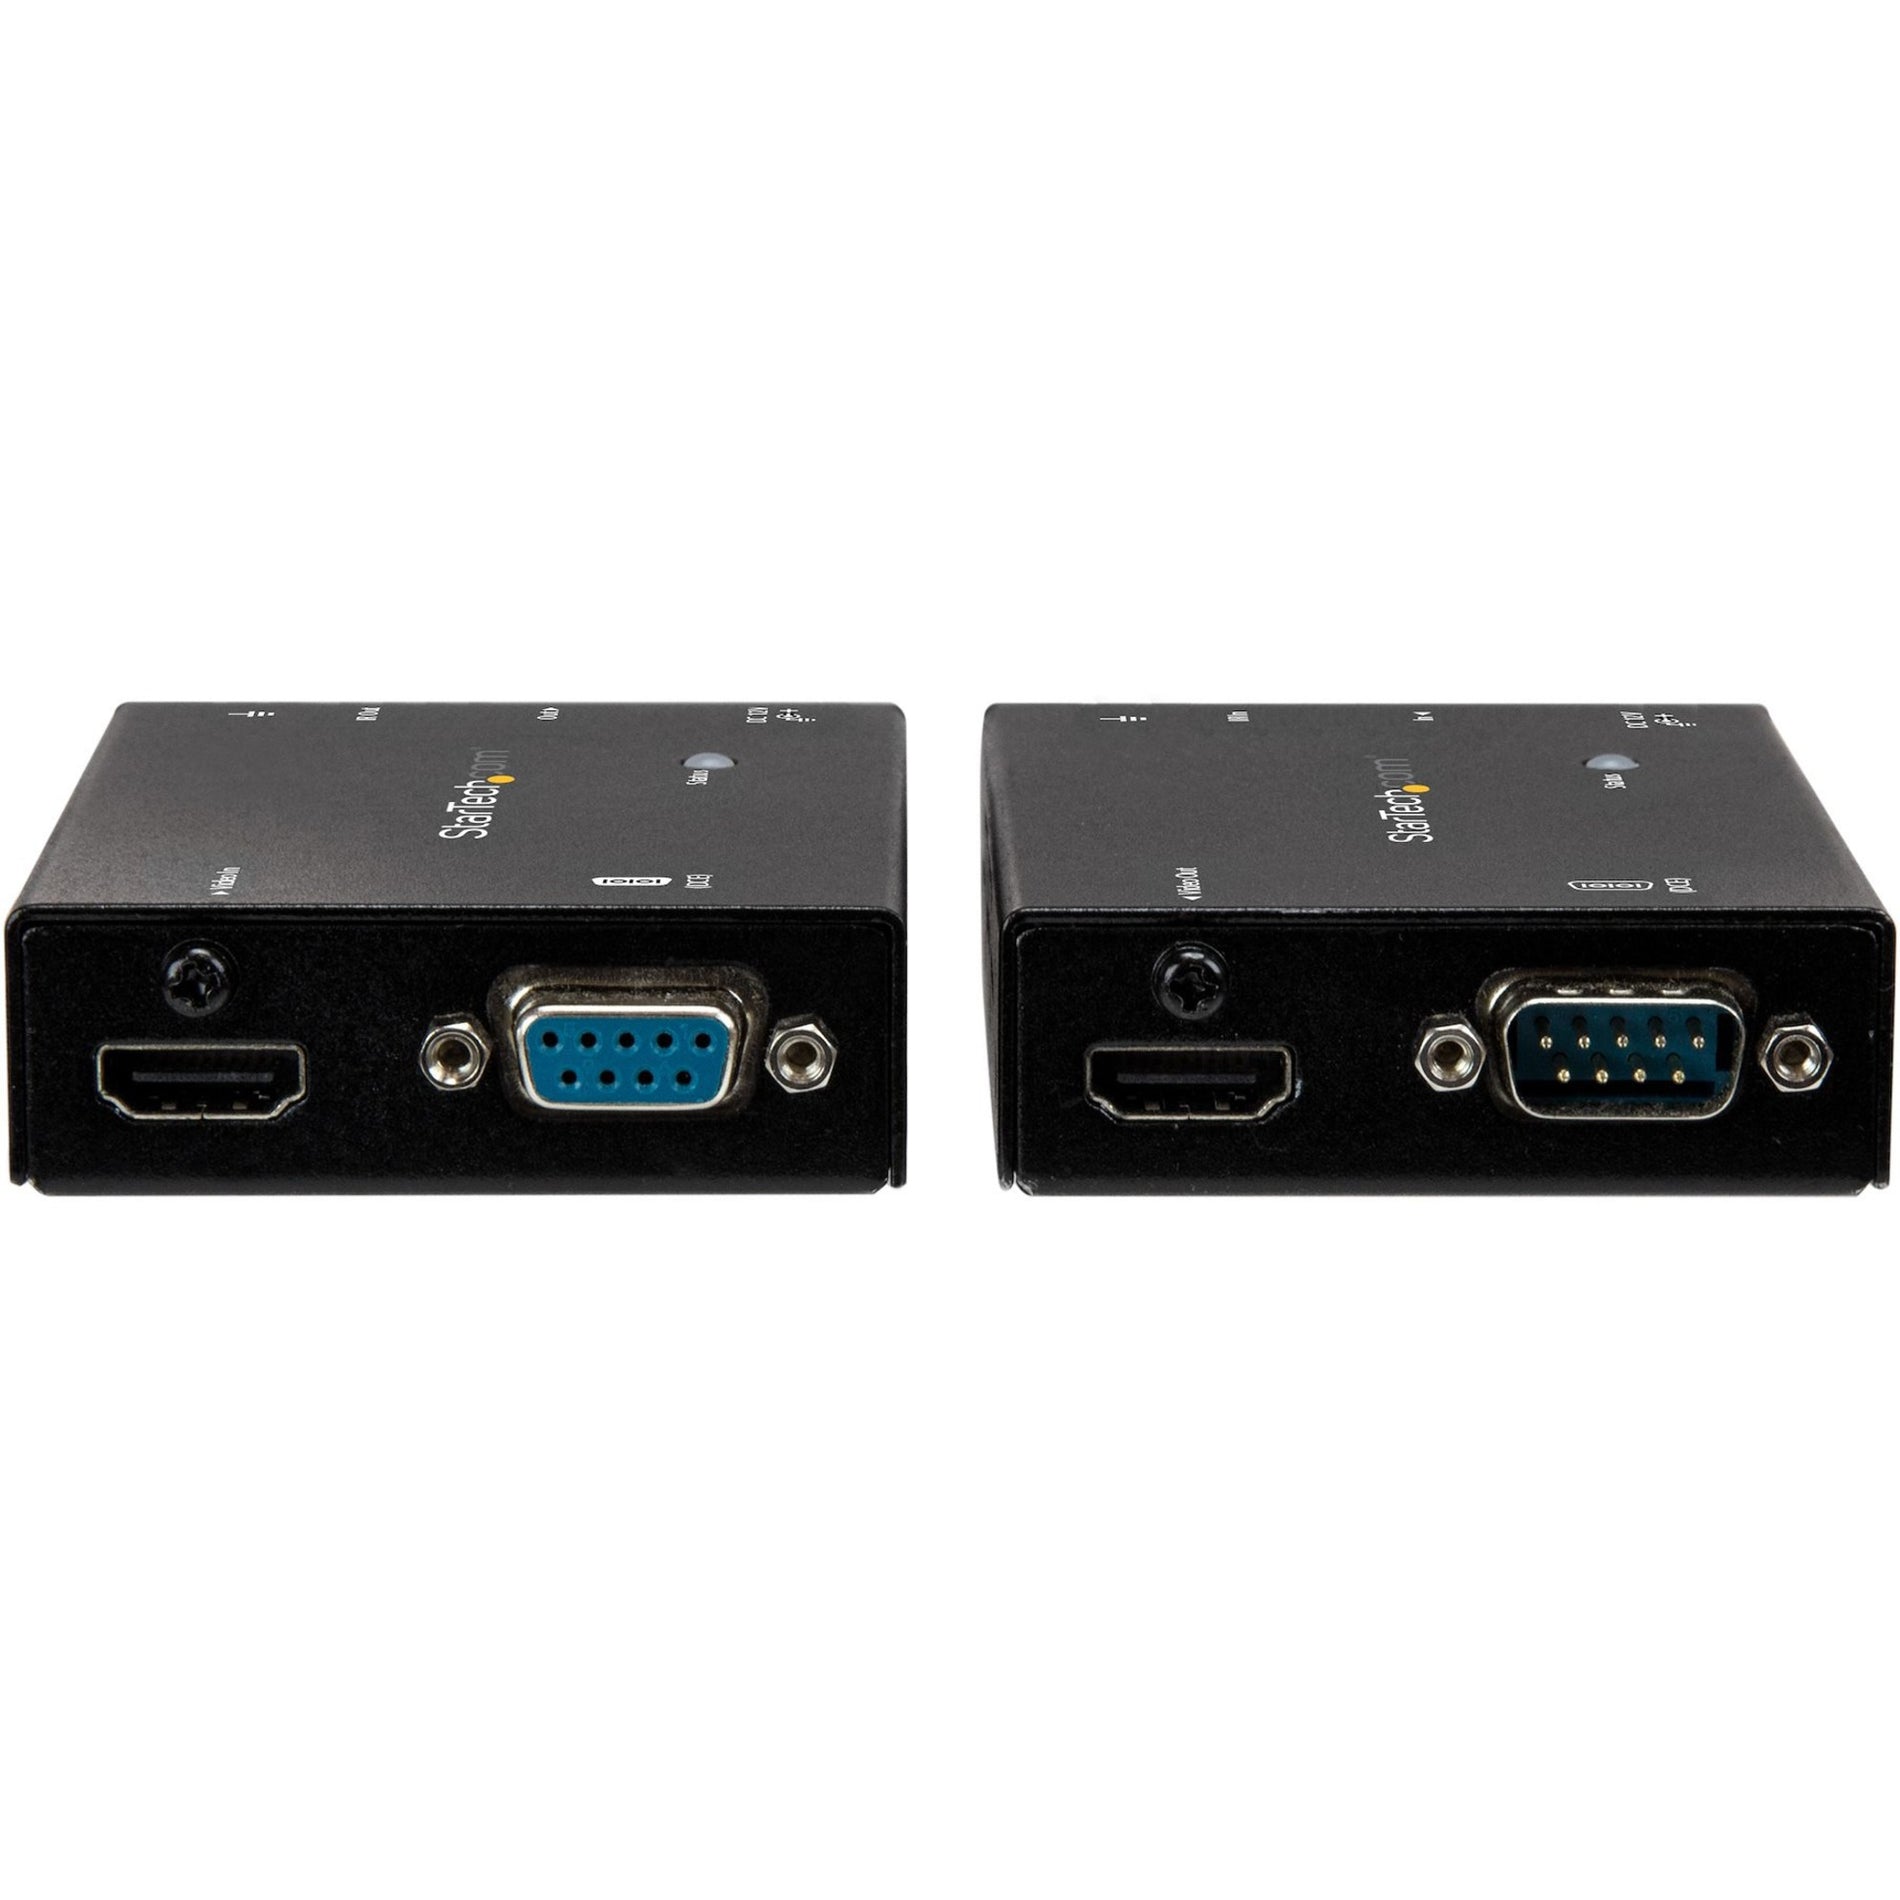 StarTech.com ST121HDBTL HDMI over CAT5 Extender with IR and Serial - HDBaseT Extender - 4K, Long Range Video Transmission